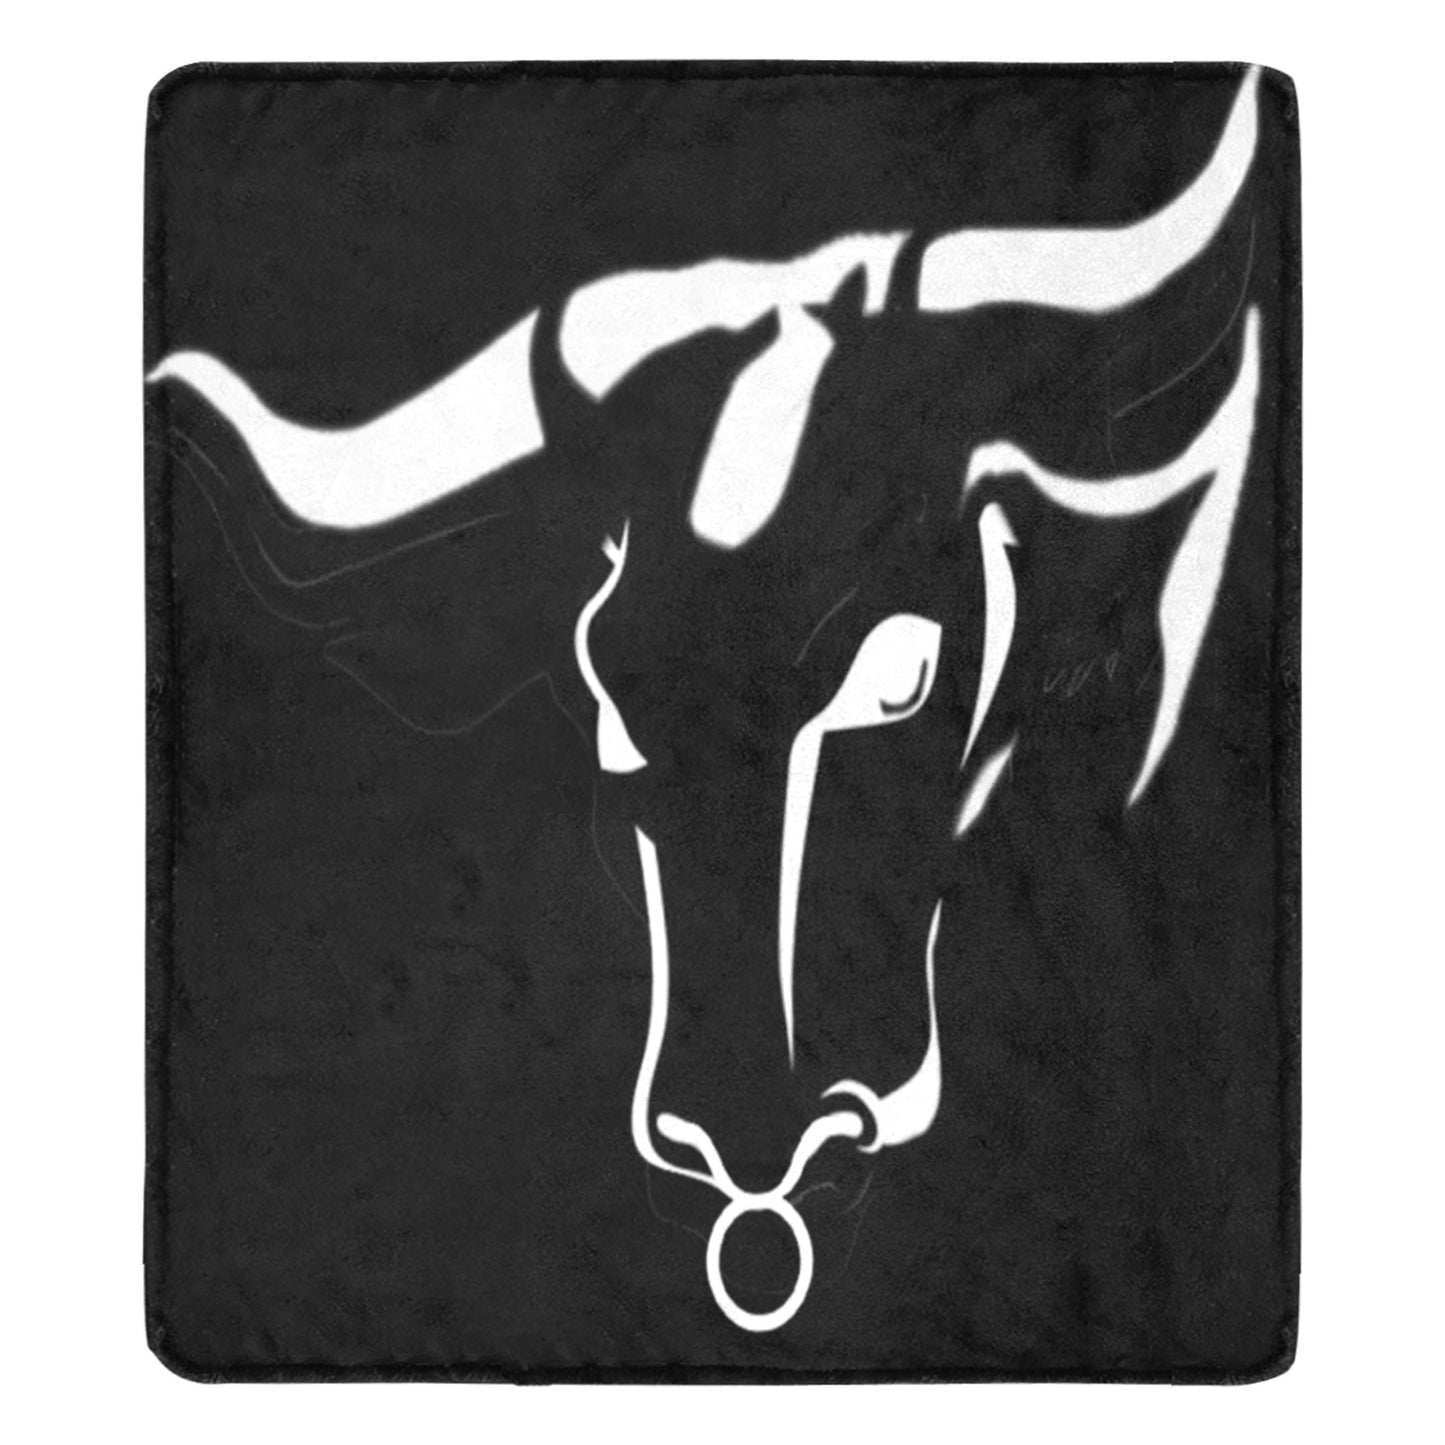 fz blanket bull (xl) one size / fz blanket - black ultra-soft micro fleece blanket 70"x80"